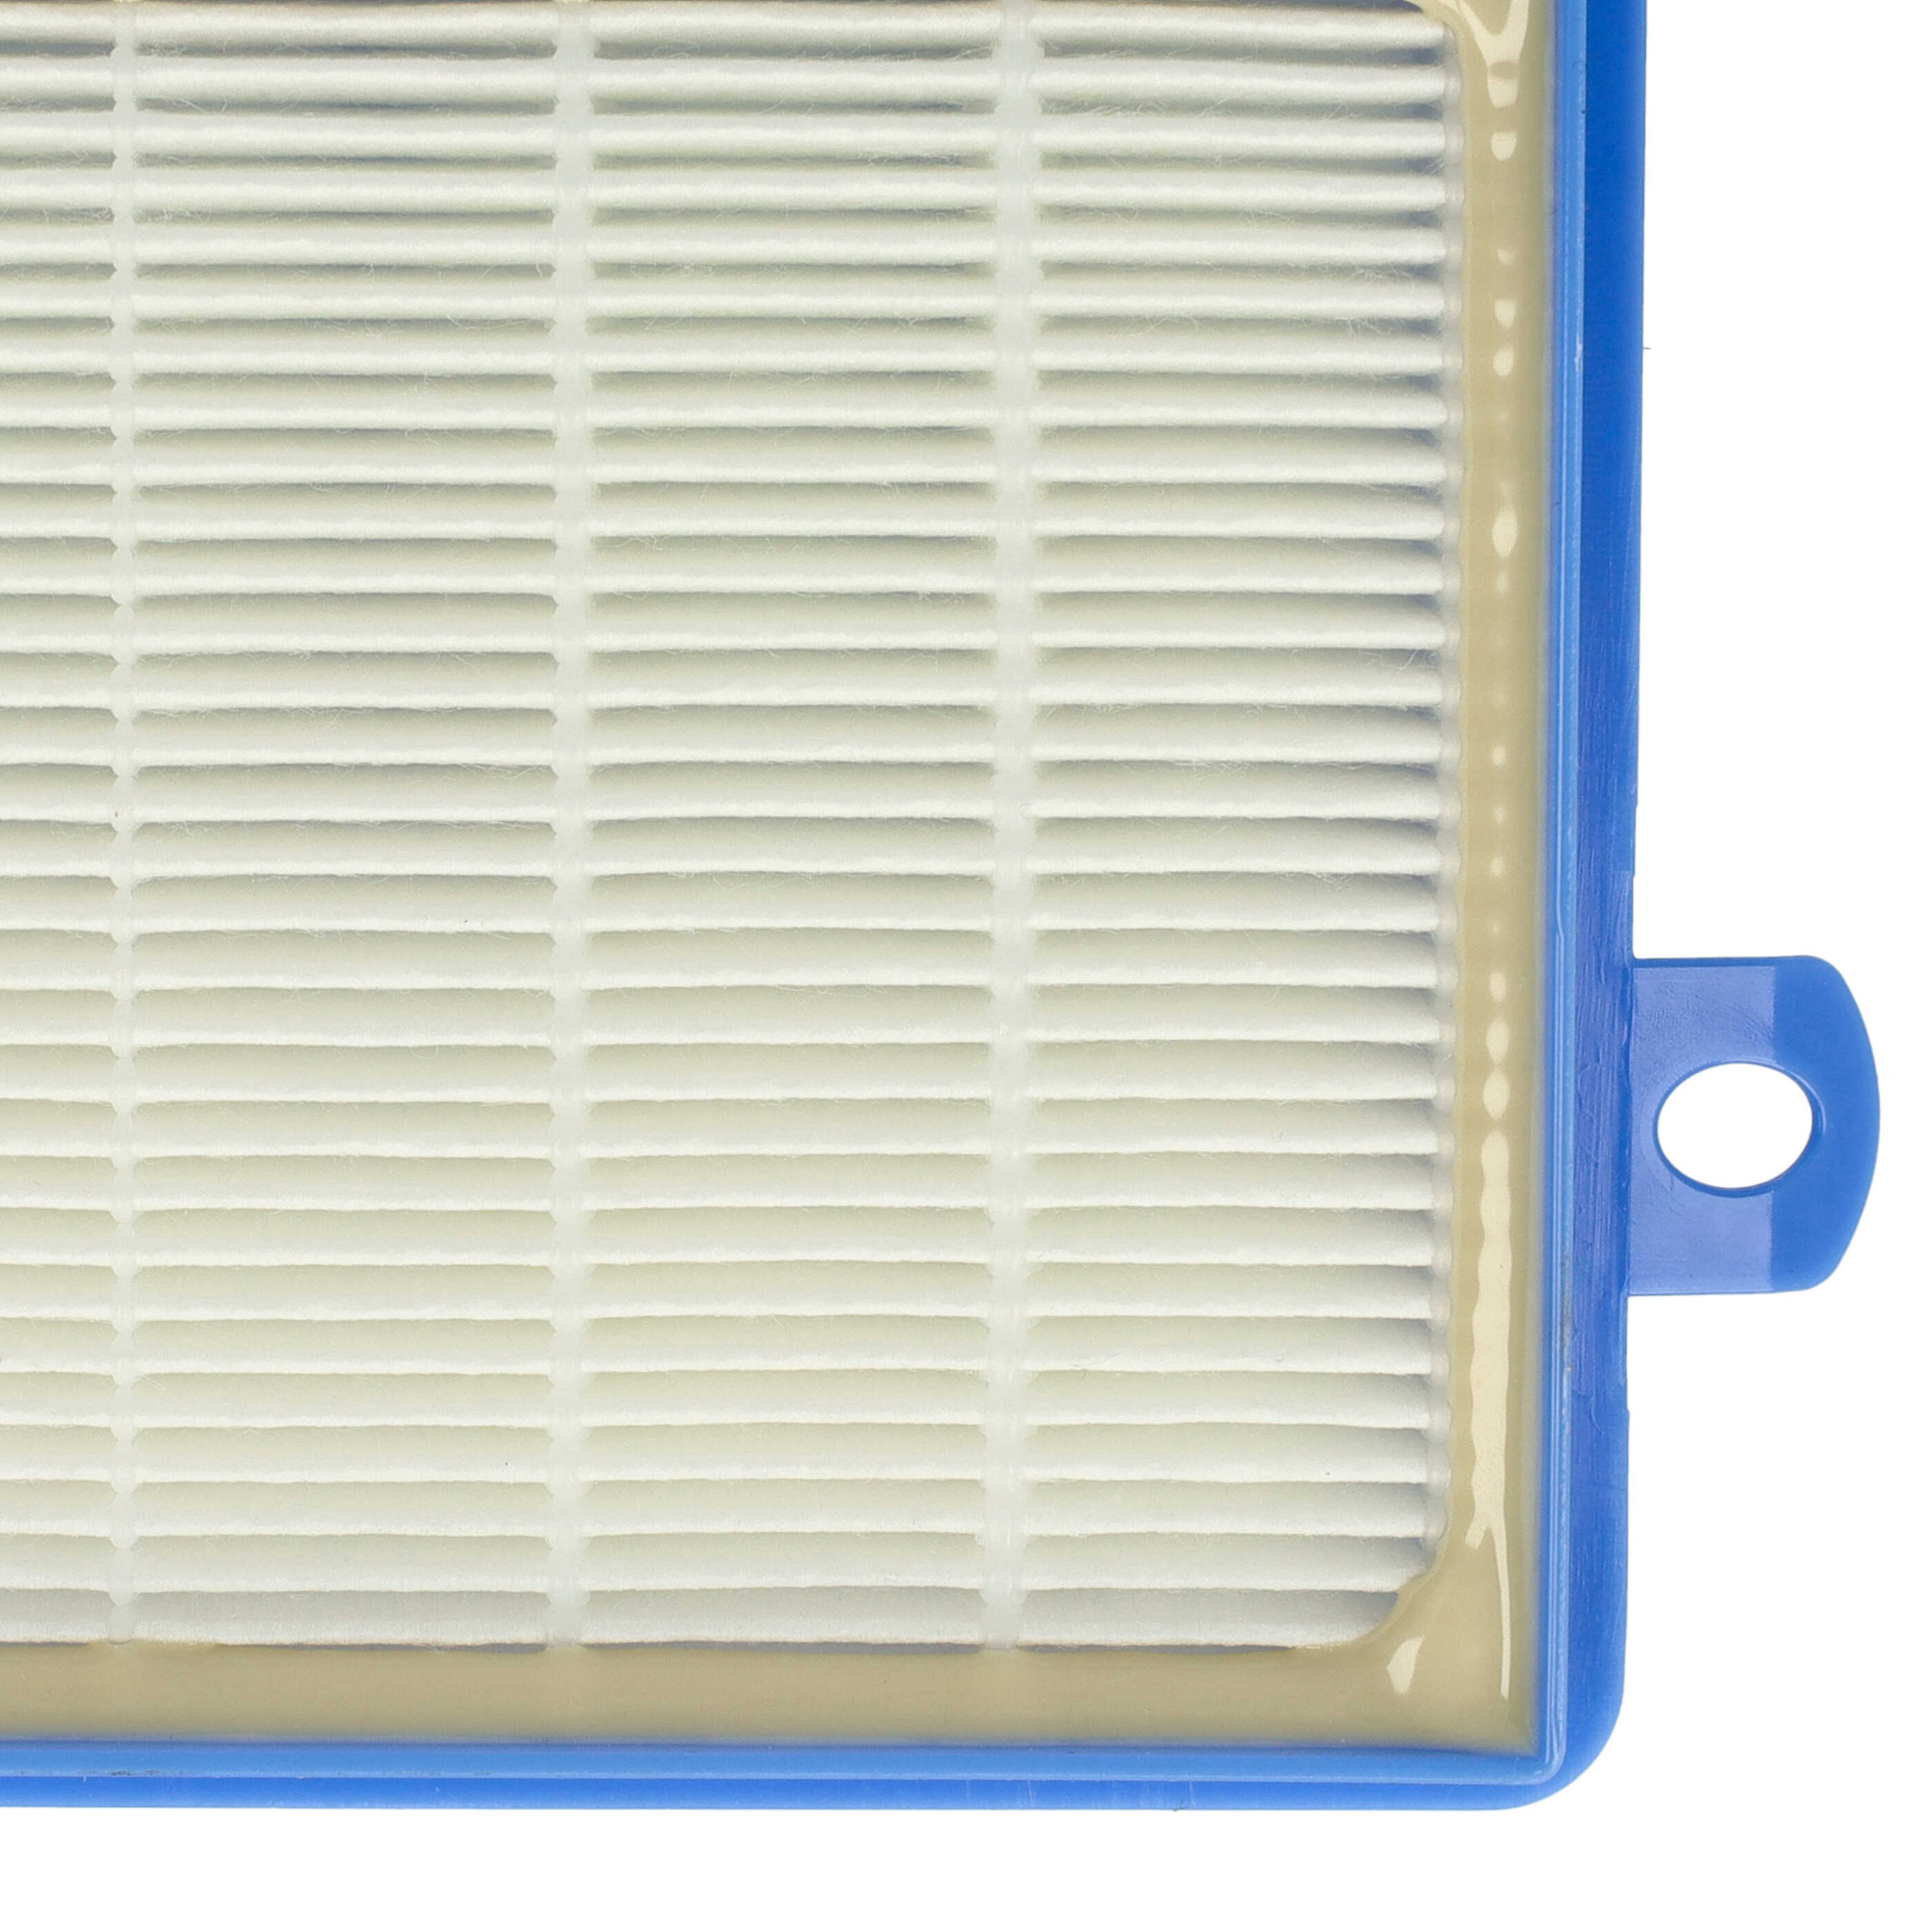 Filtre remplace AEF13W, H13, AEF 13 W pour aspirateur - filtre HEPA F7